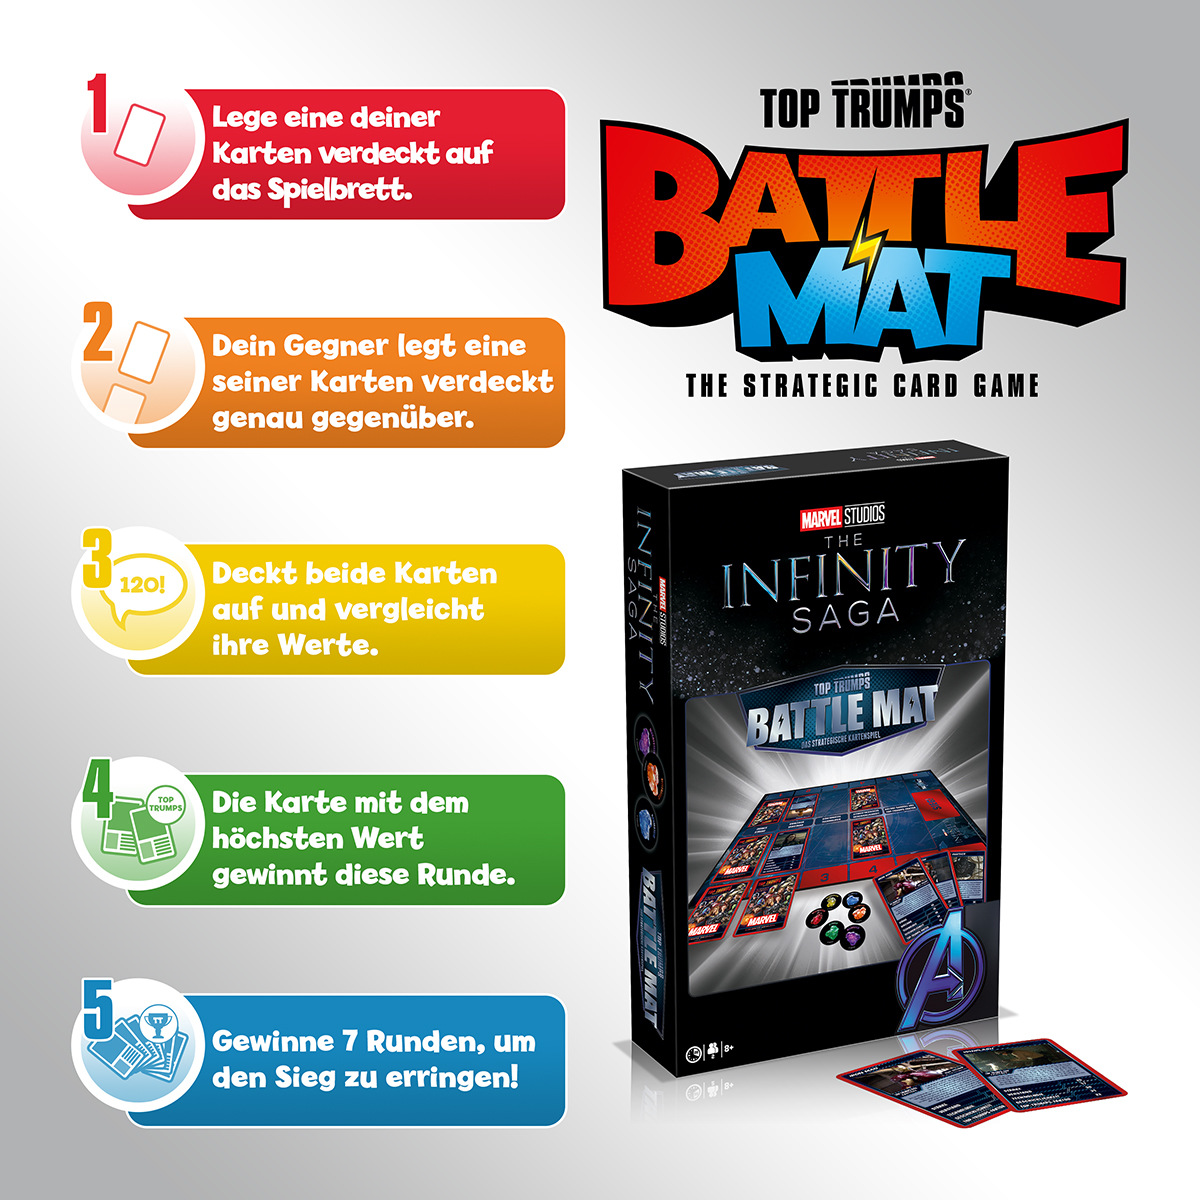 Marvel MOVES Top Kartenspiele WINNING Battle Mat - Trumps inkl.